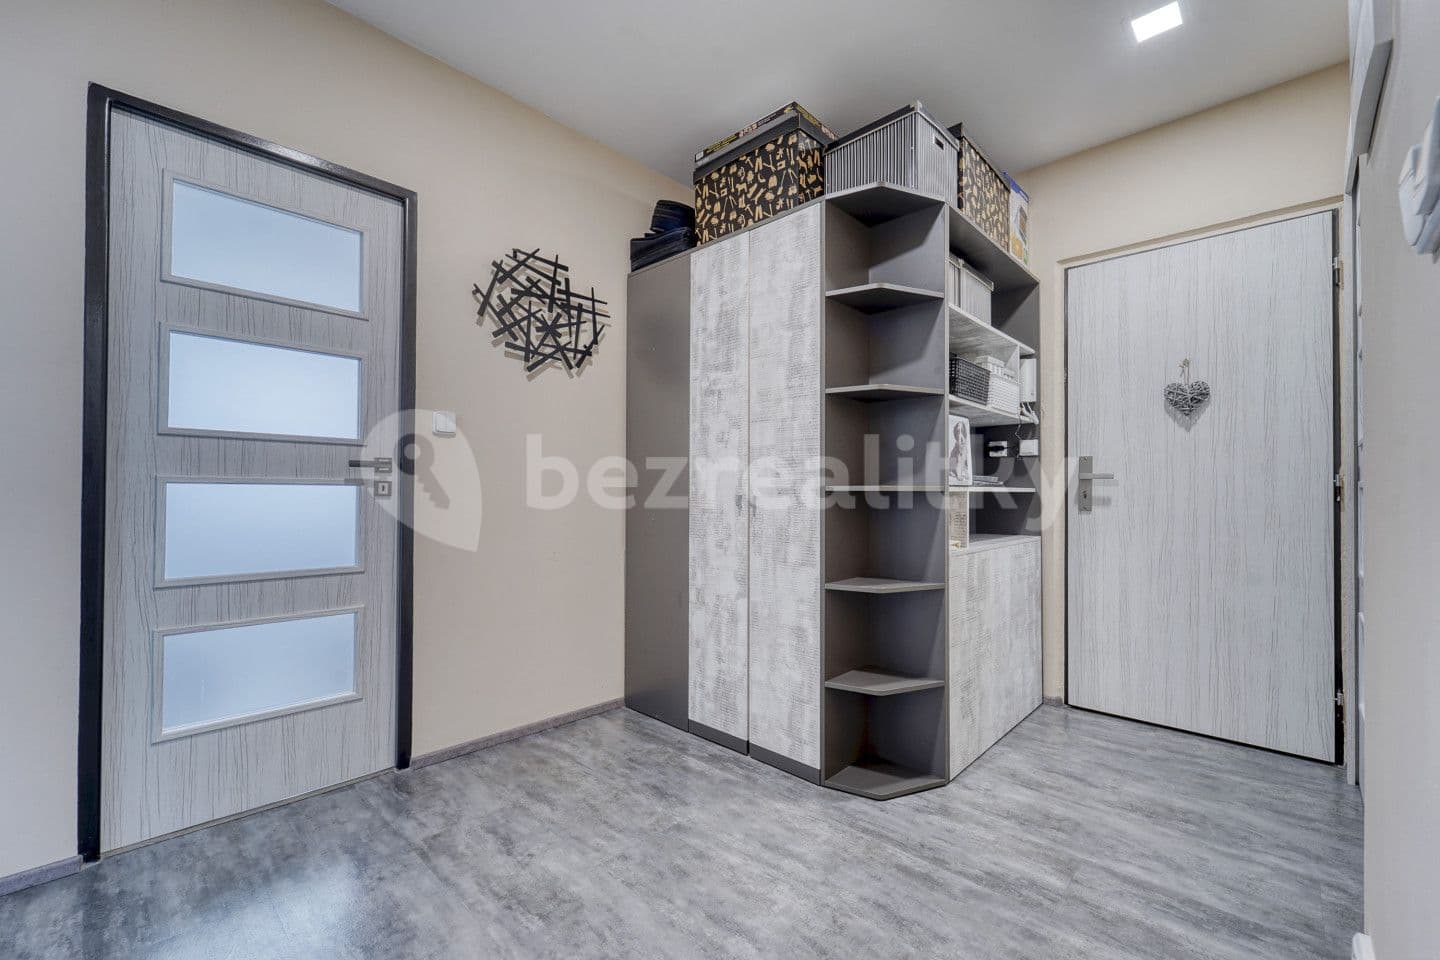 2 bedroom flat for sale, 61 m², Luďka Pika, Plzeň, Plzeňský Region